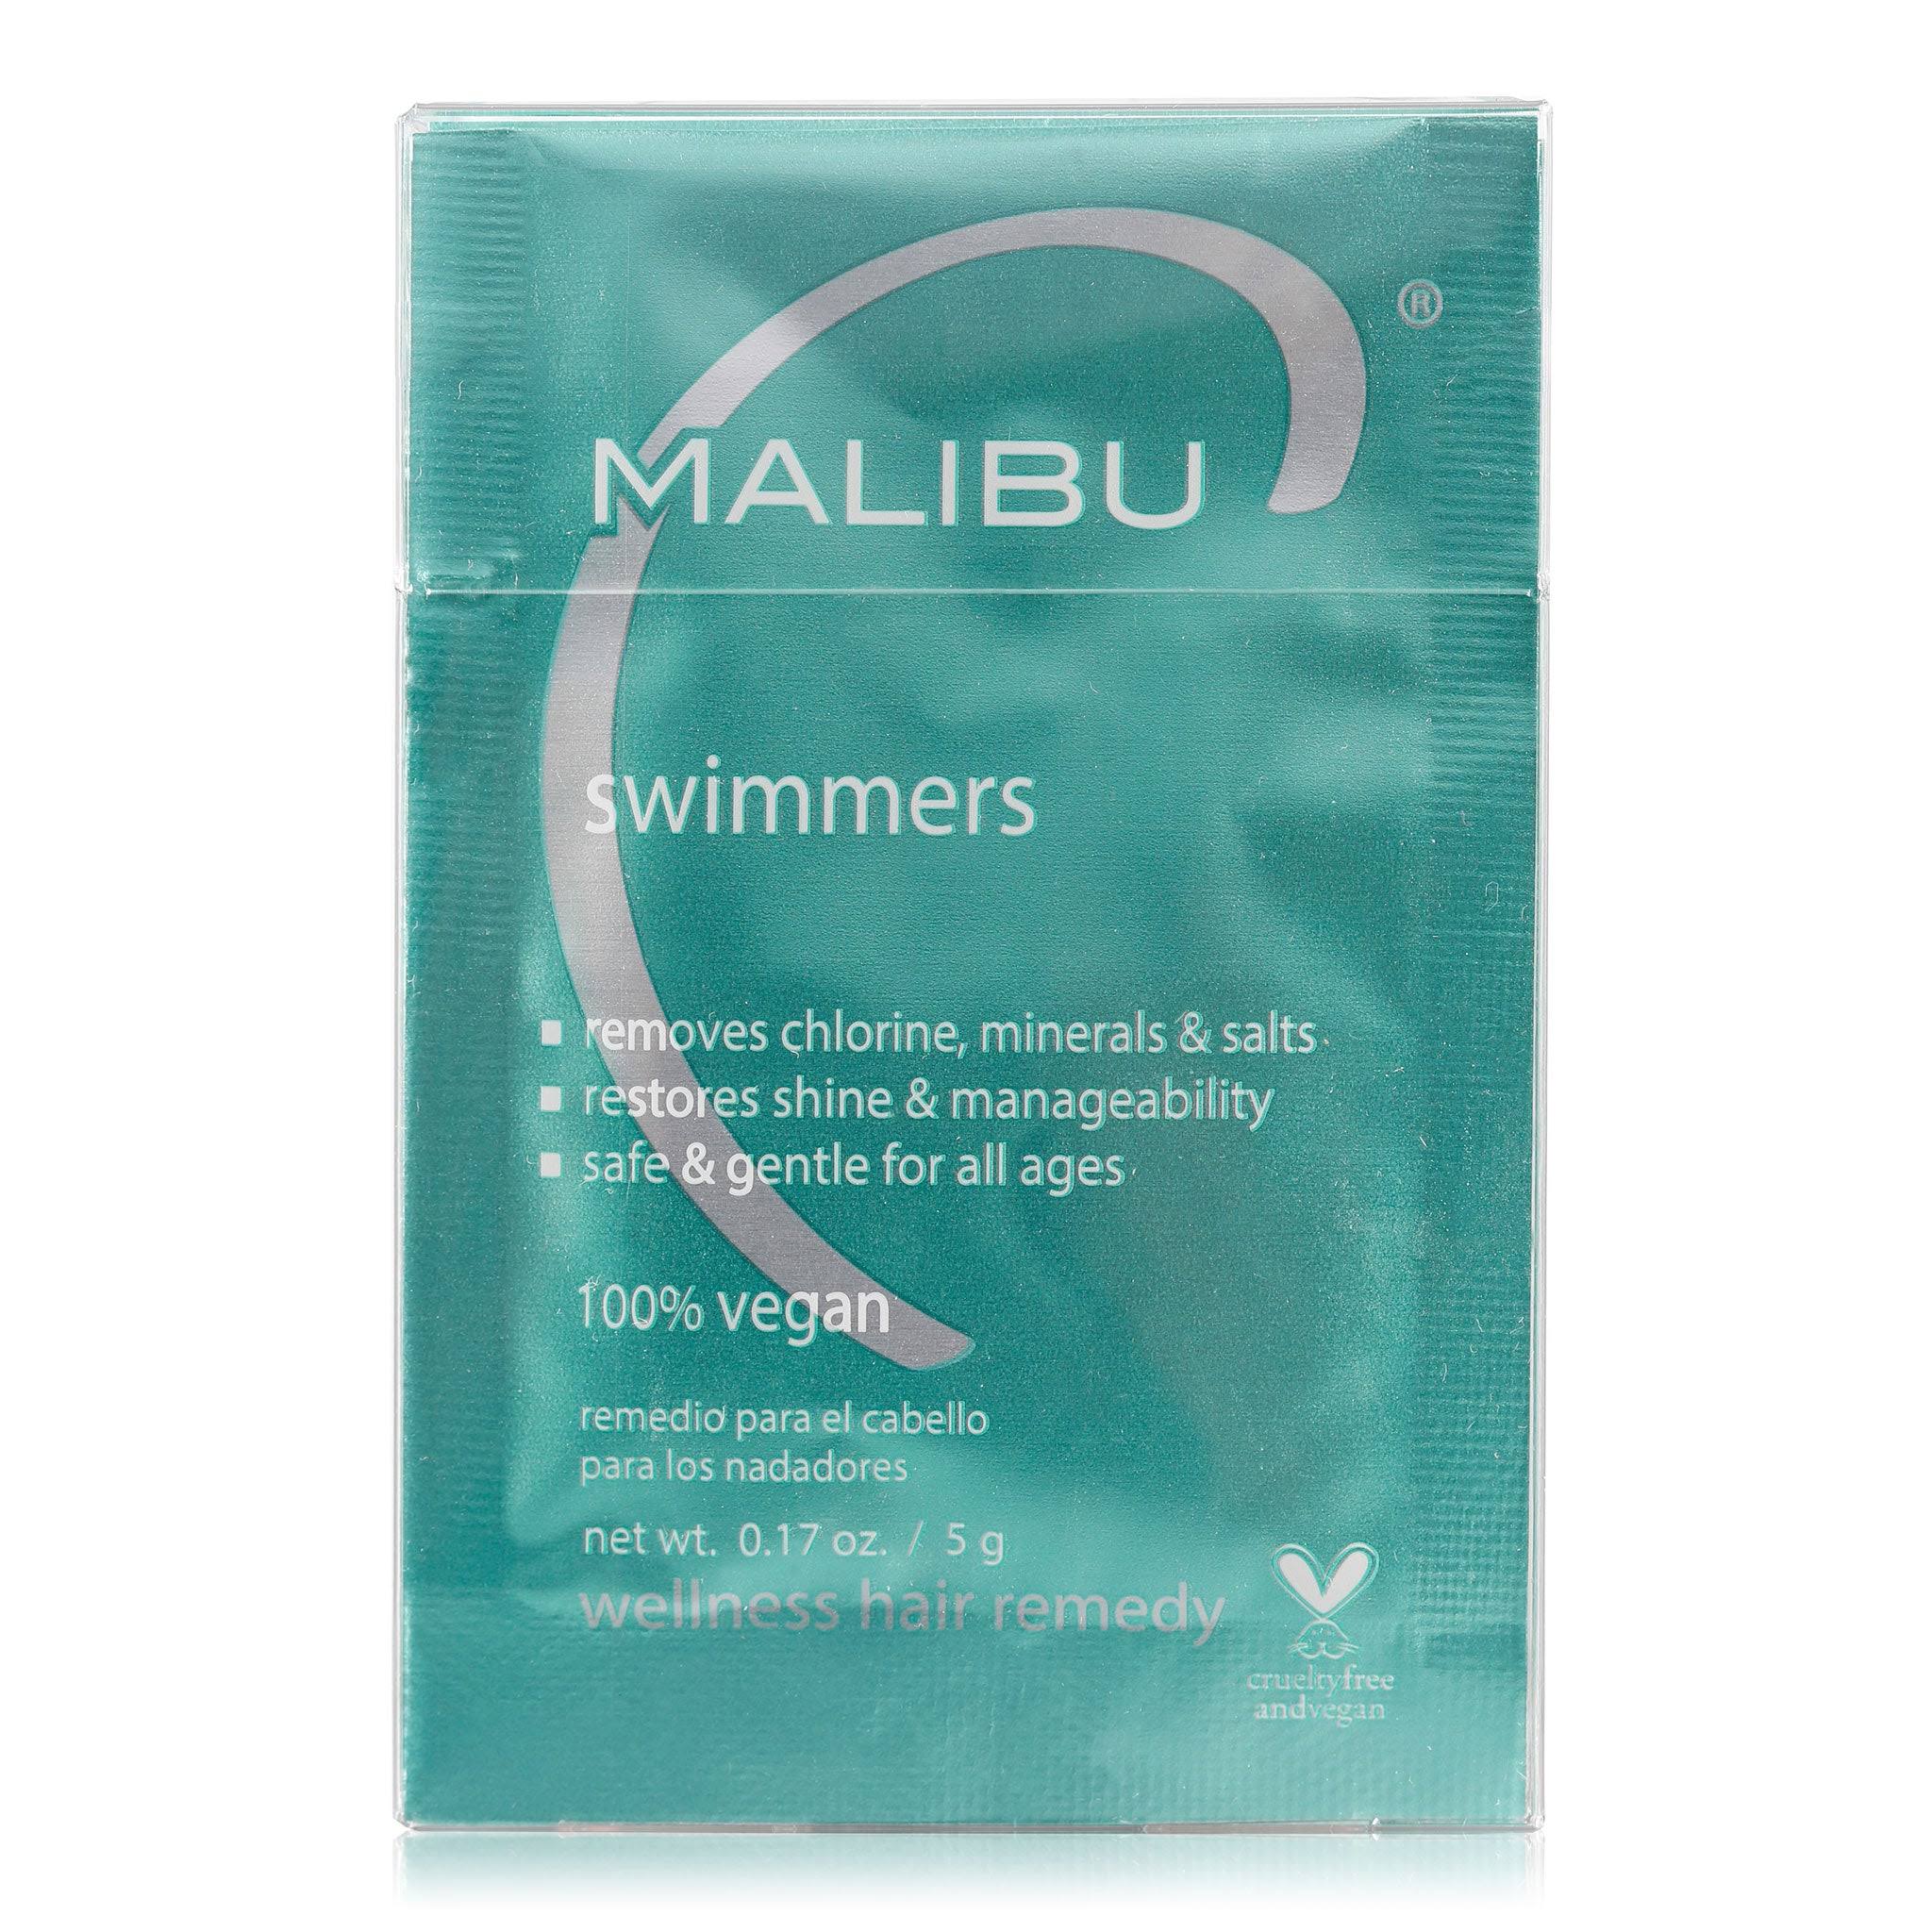 Malibu C Swimmers Wellness Hair Remedy - 0.17oz, 12pk